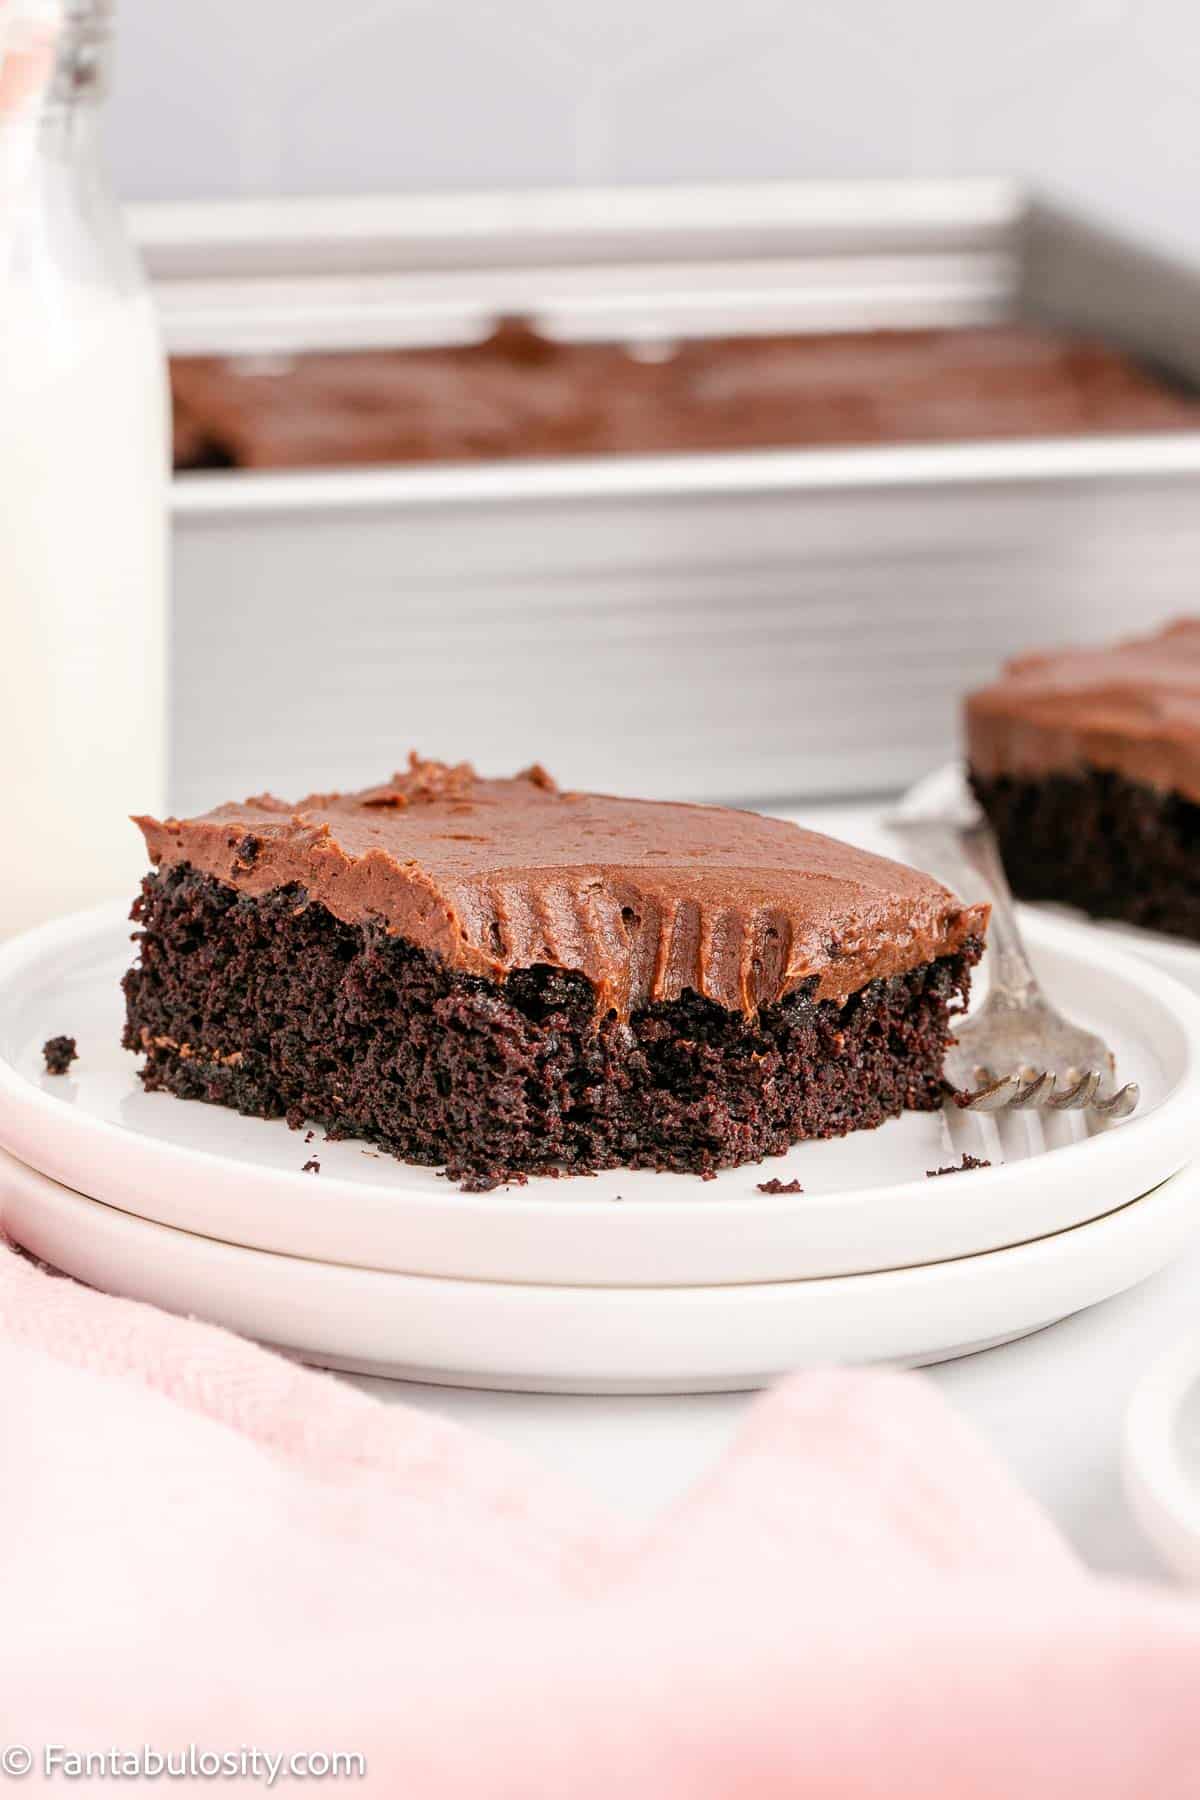 Slice of chocolate depression cake on white plate, sitting next to cake pan.